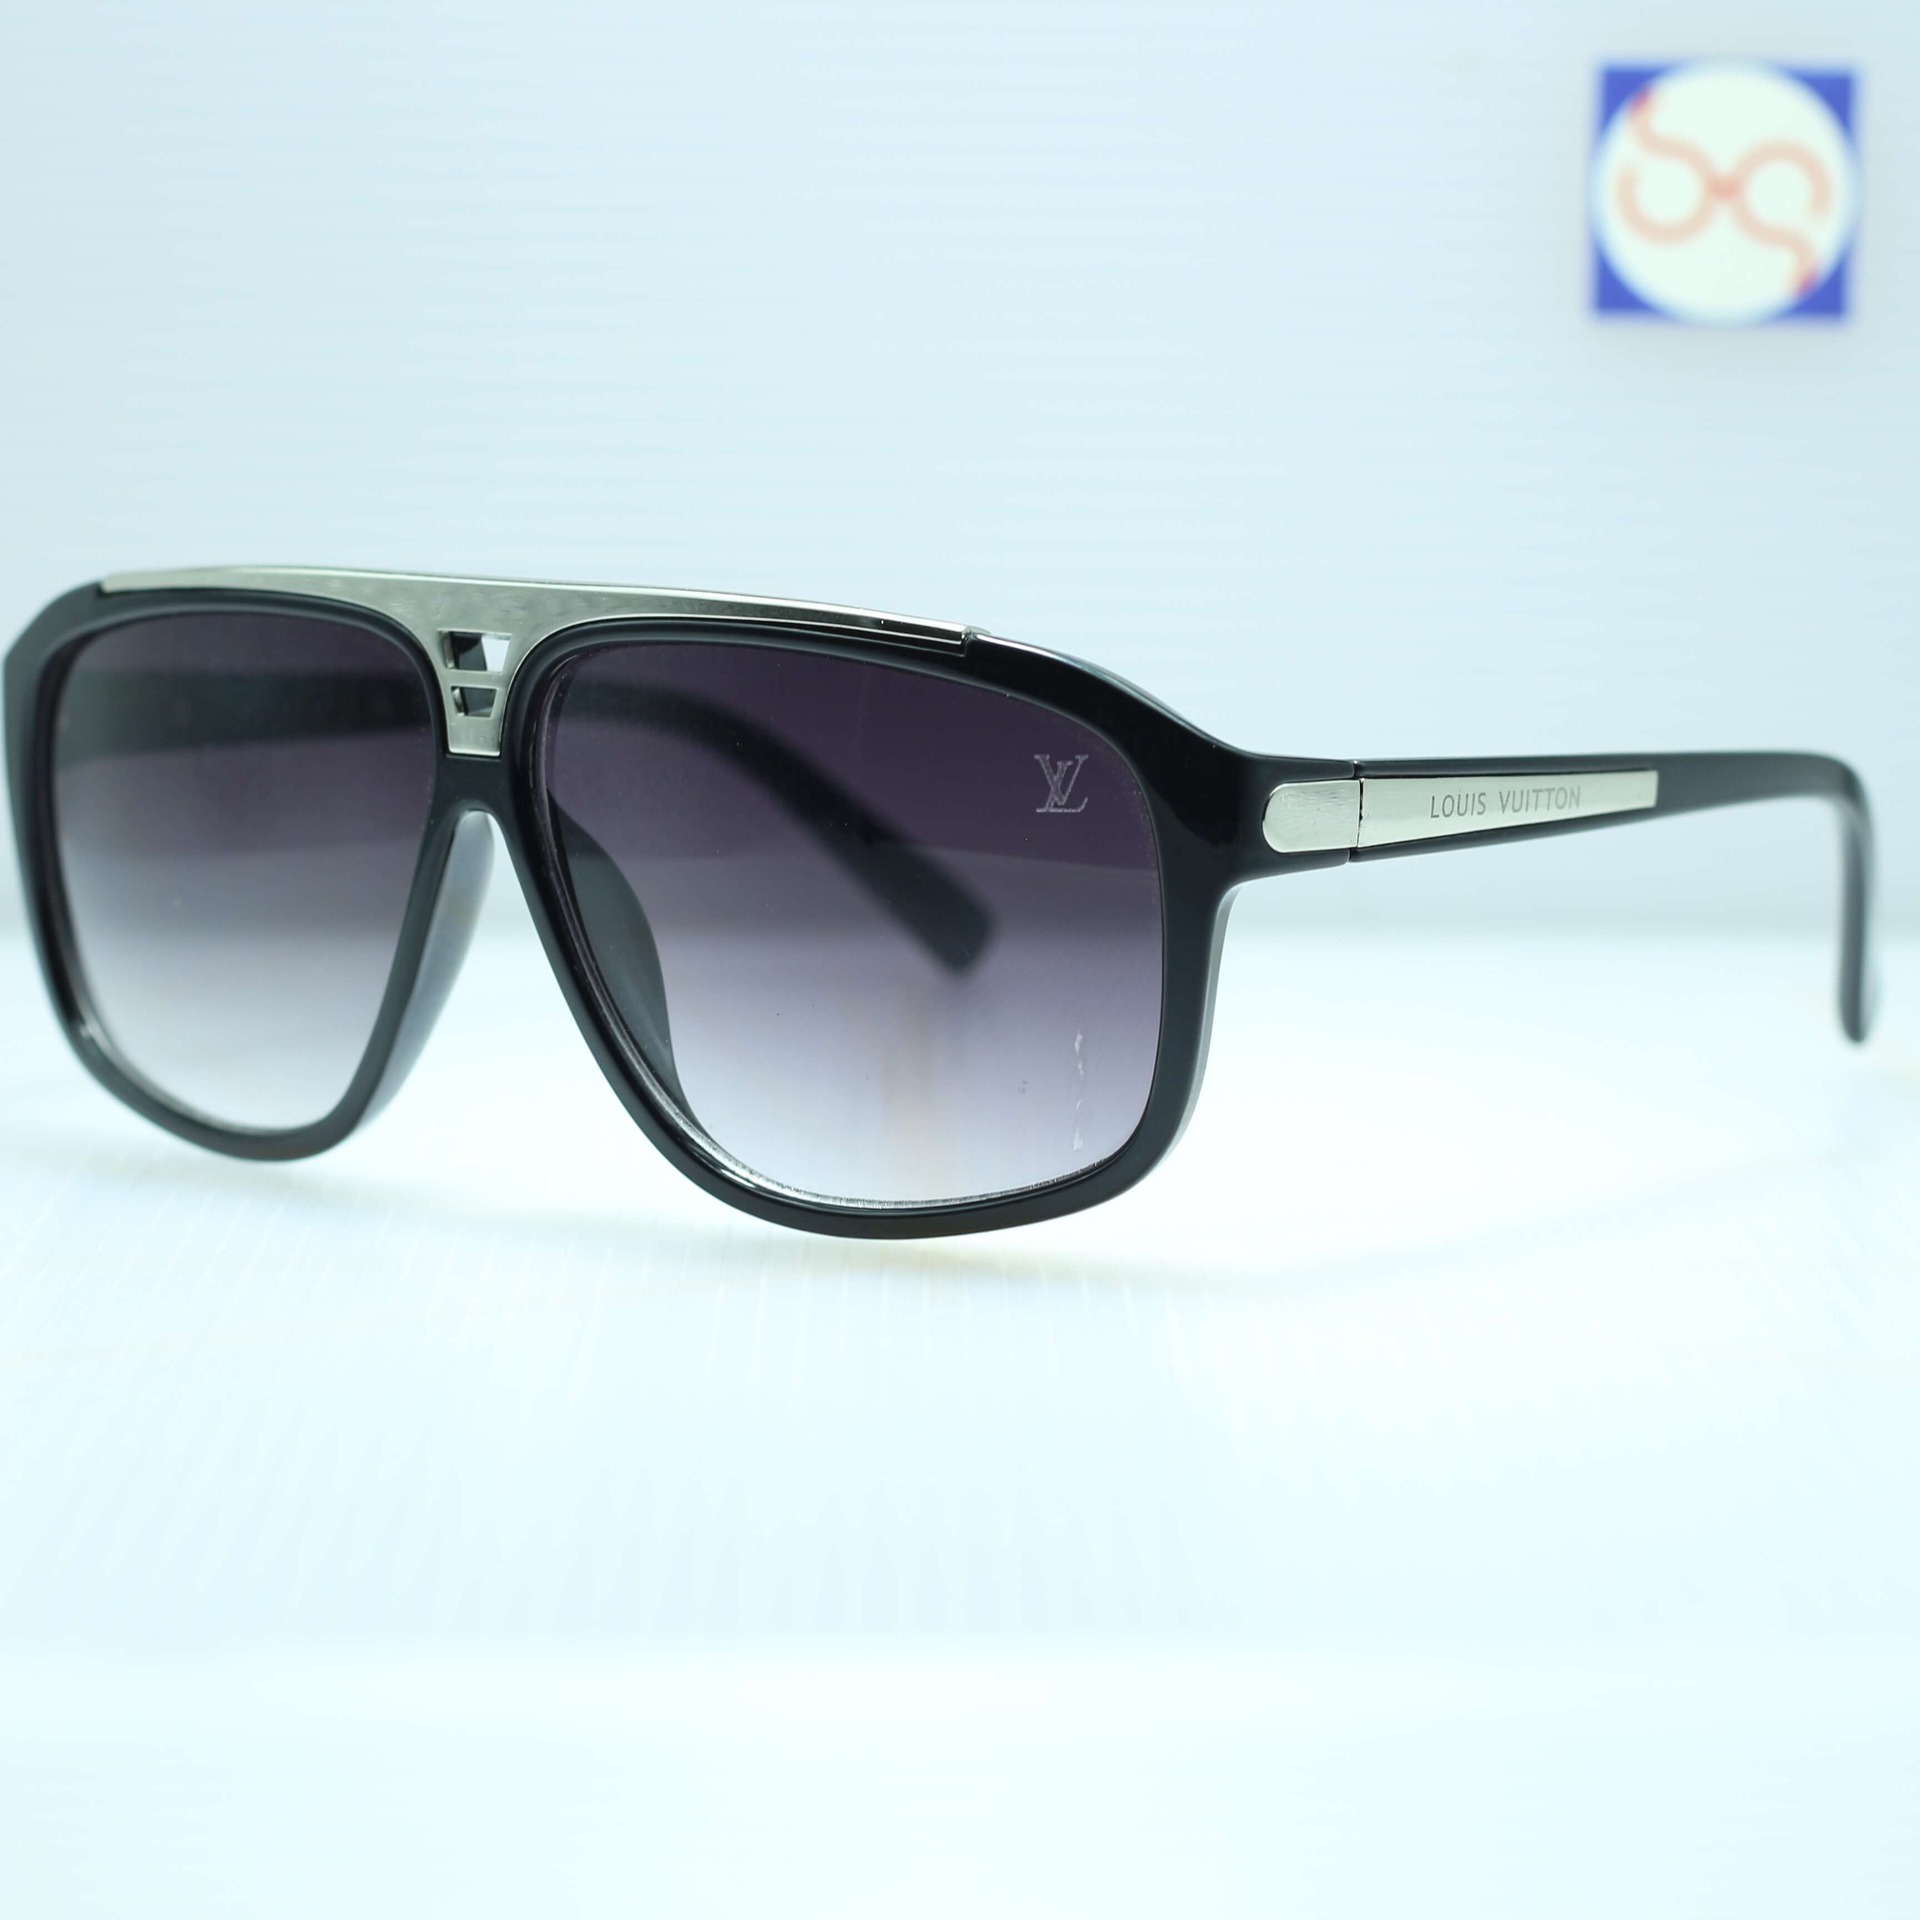 Louis Vuitton Black&Silver Evidence Sunglasses for Sale in Santa